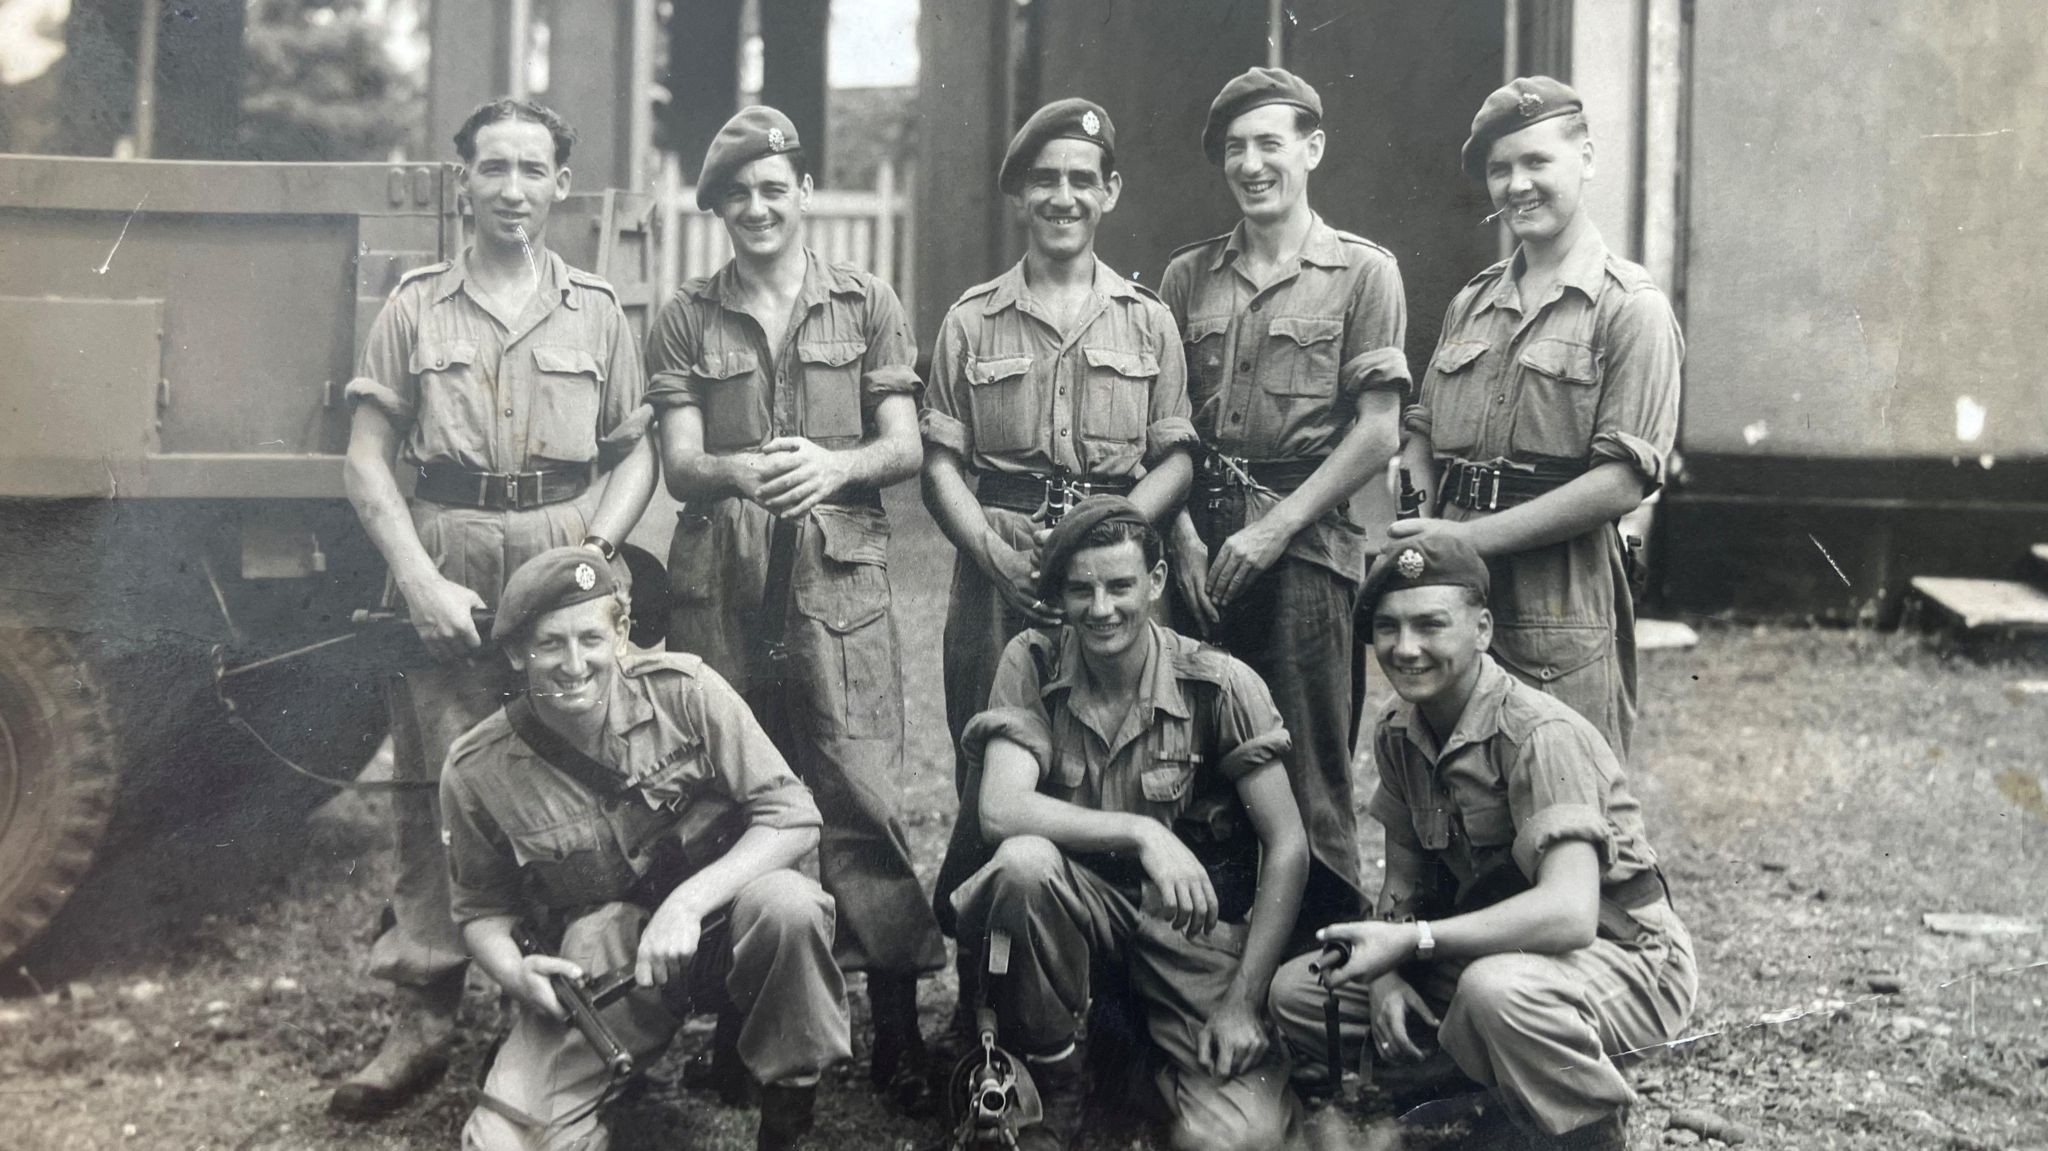 Photo of servicemen in WW2